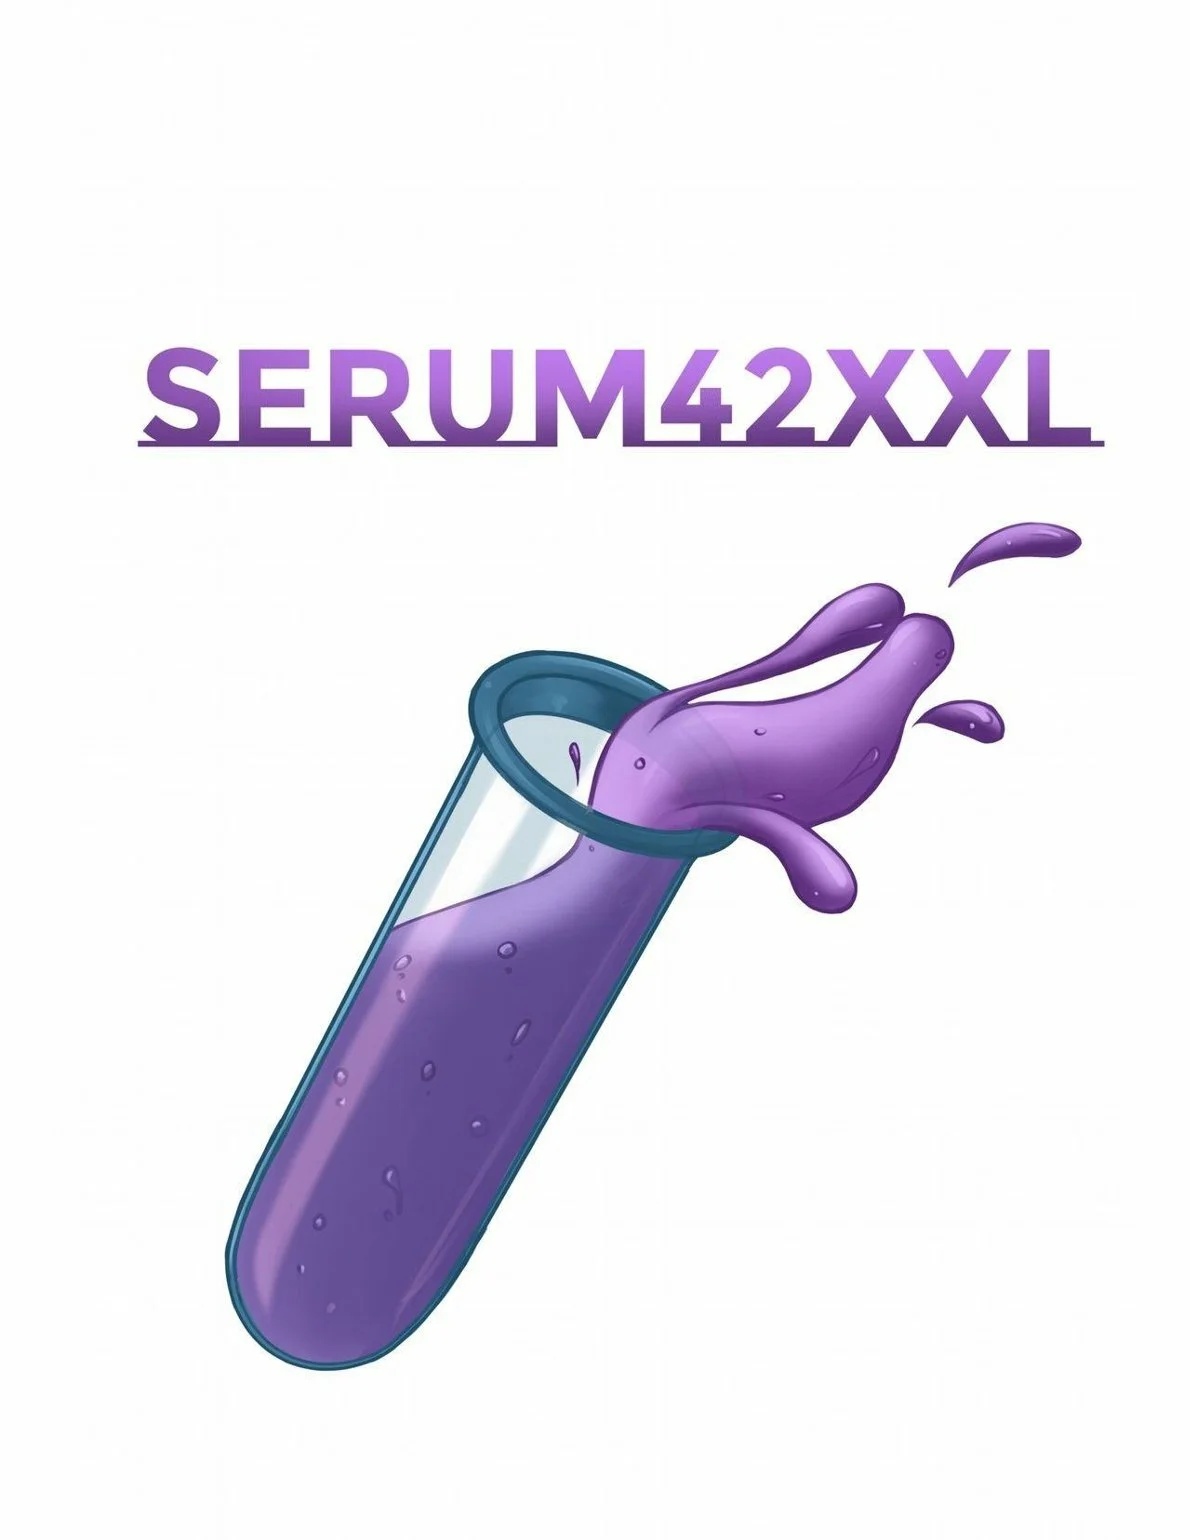 Serum42XXL (completo) - 96